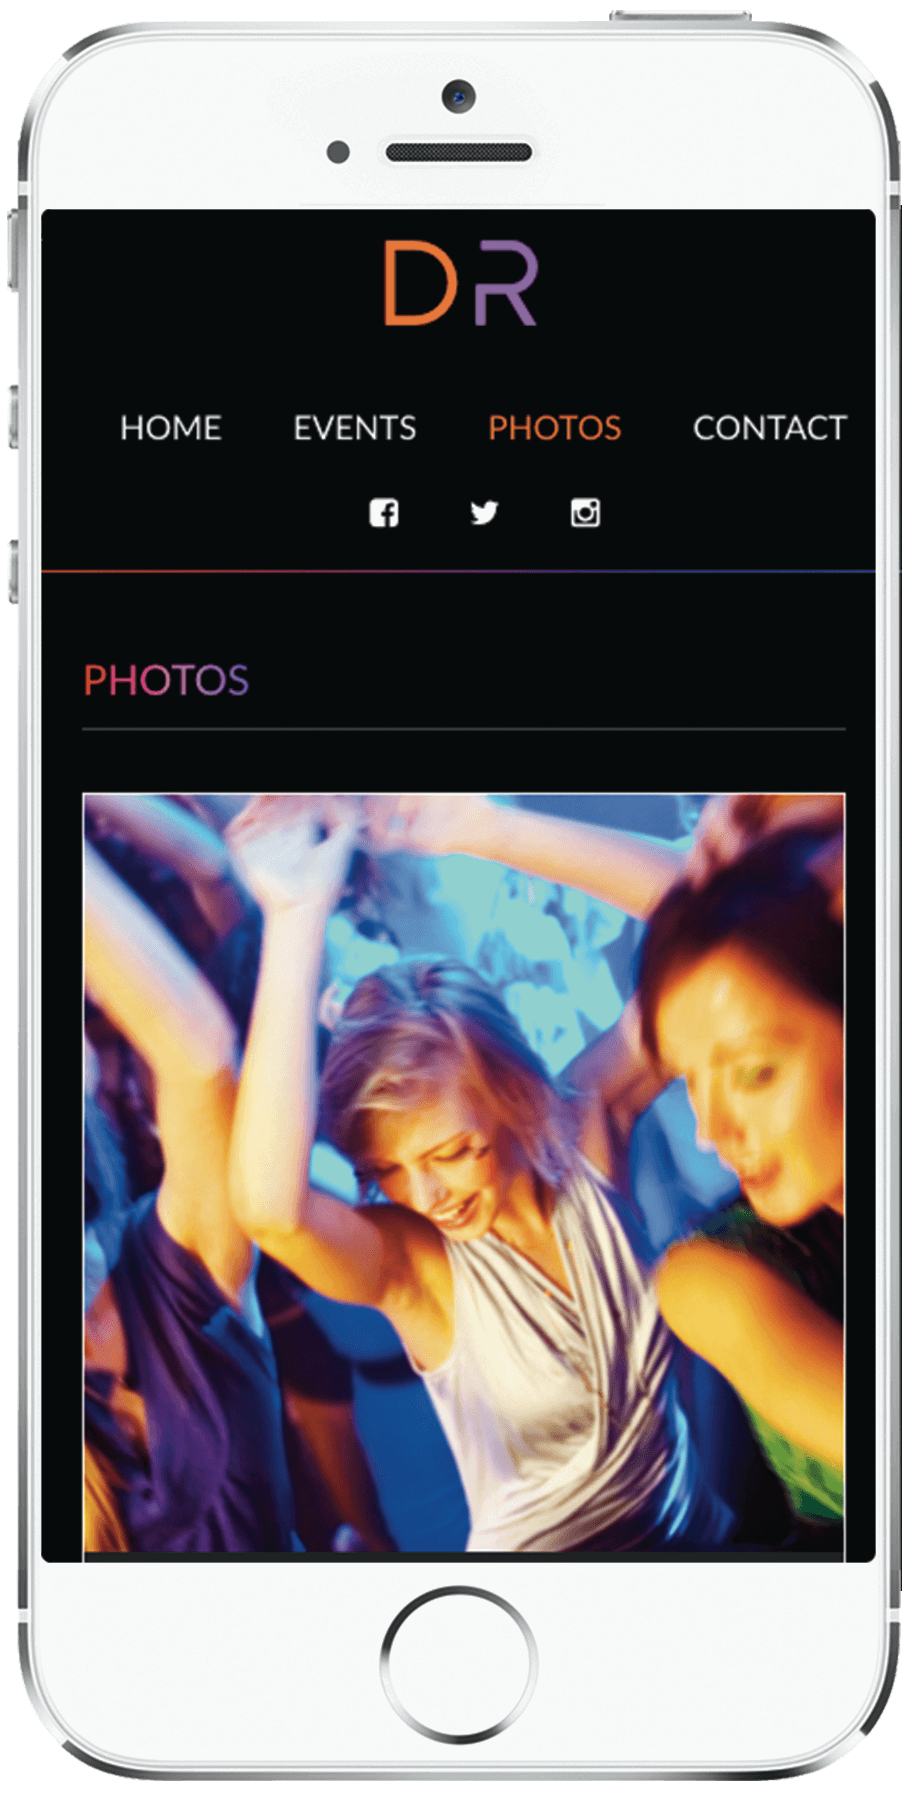 Dance Room mobile - Photos